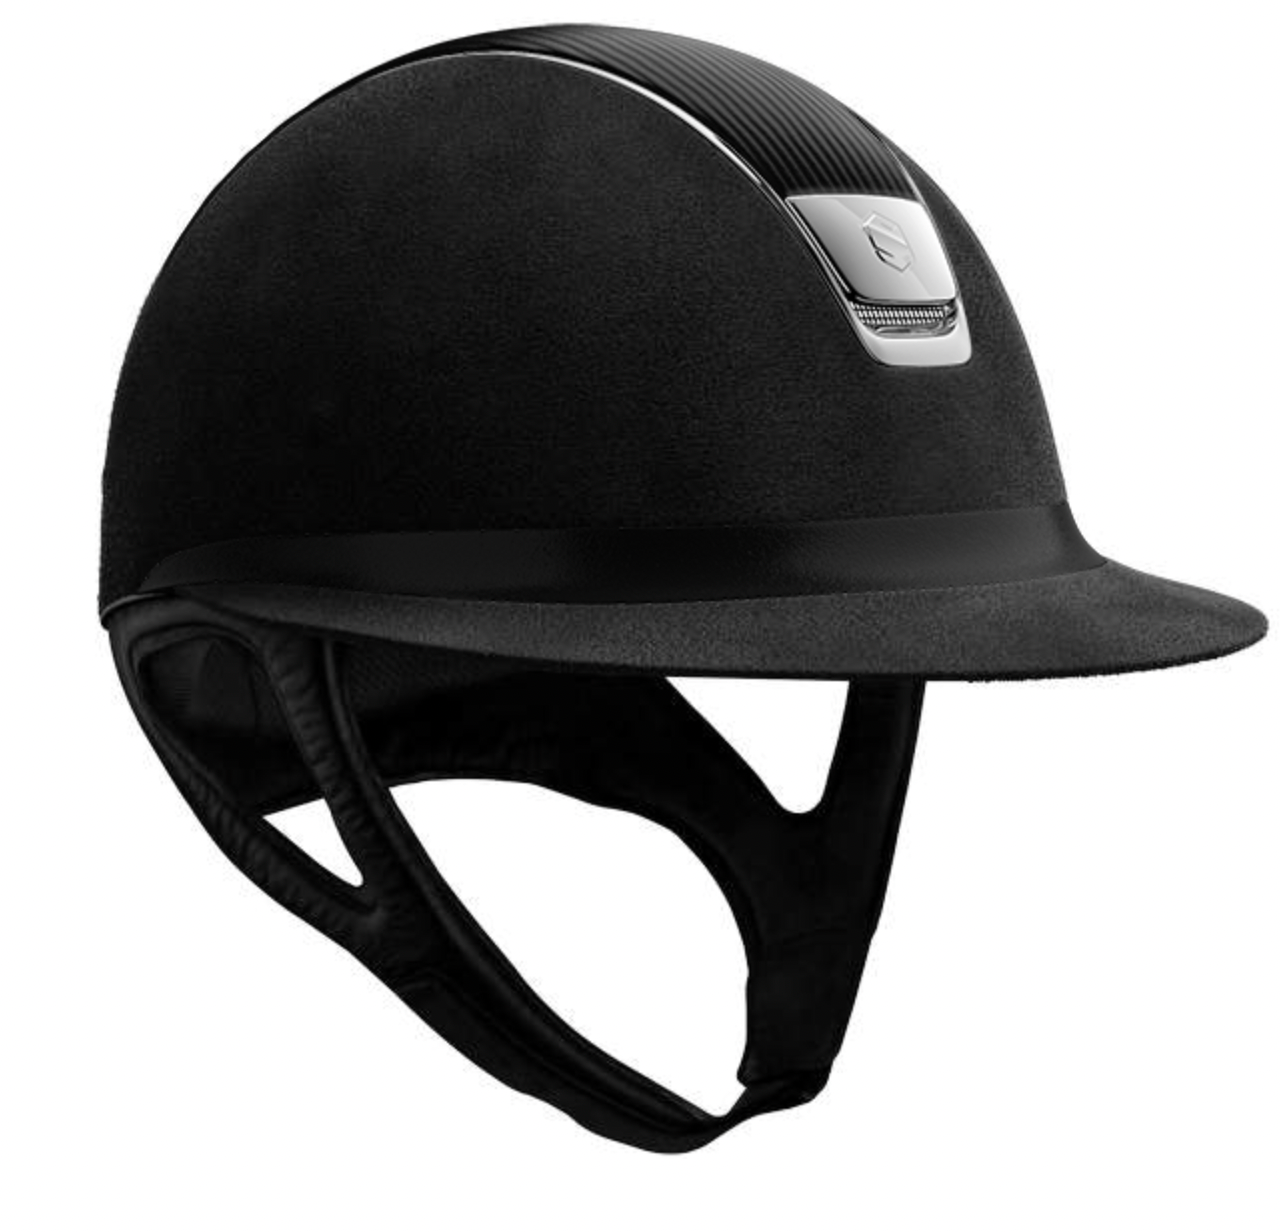 Samshield Miss Shield Helmet Premium Alcantara with Leather Top